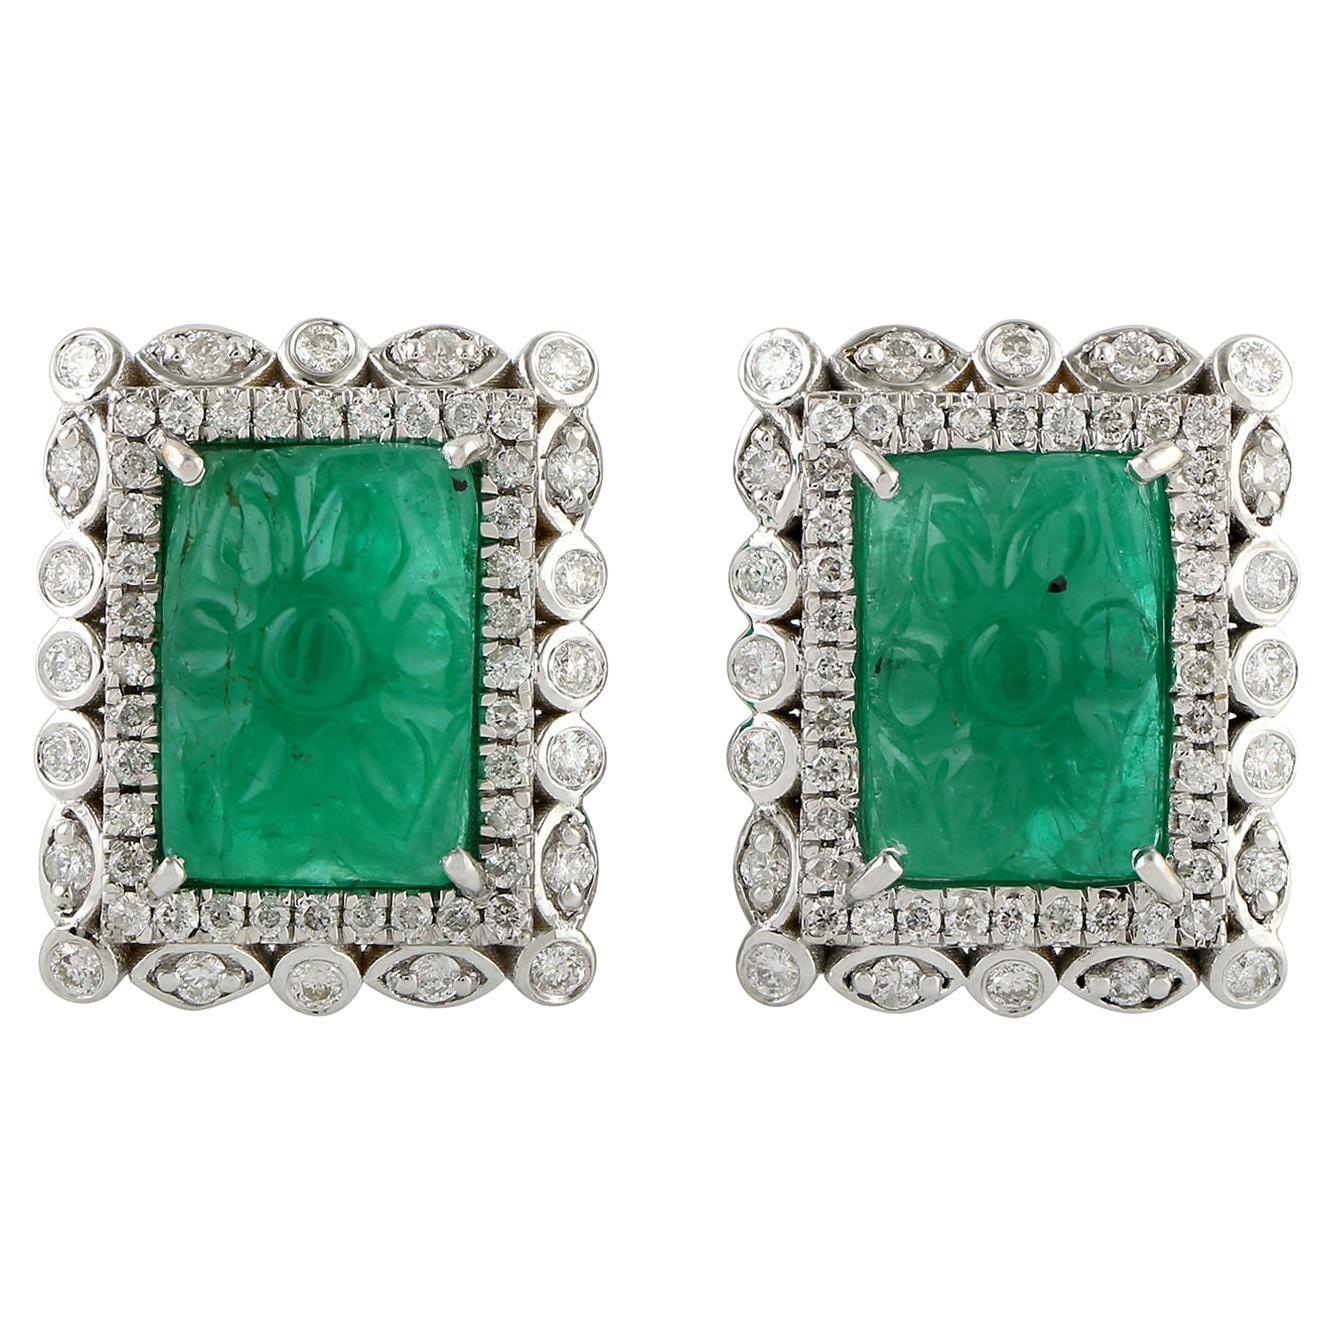 6.72ct Emerald Studs Carved With Diamonds Made In 18k White Gold (Émeraude sculptée avec diamants)